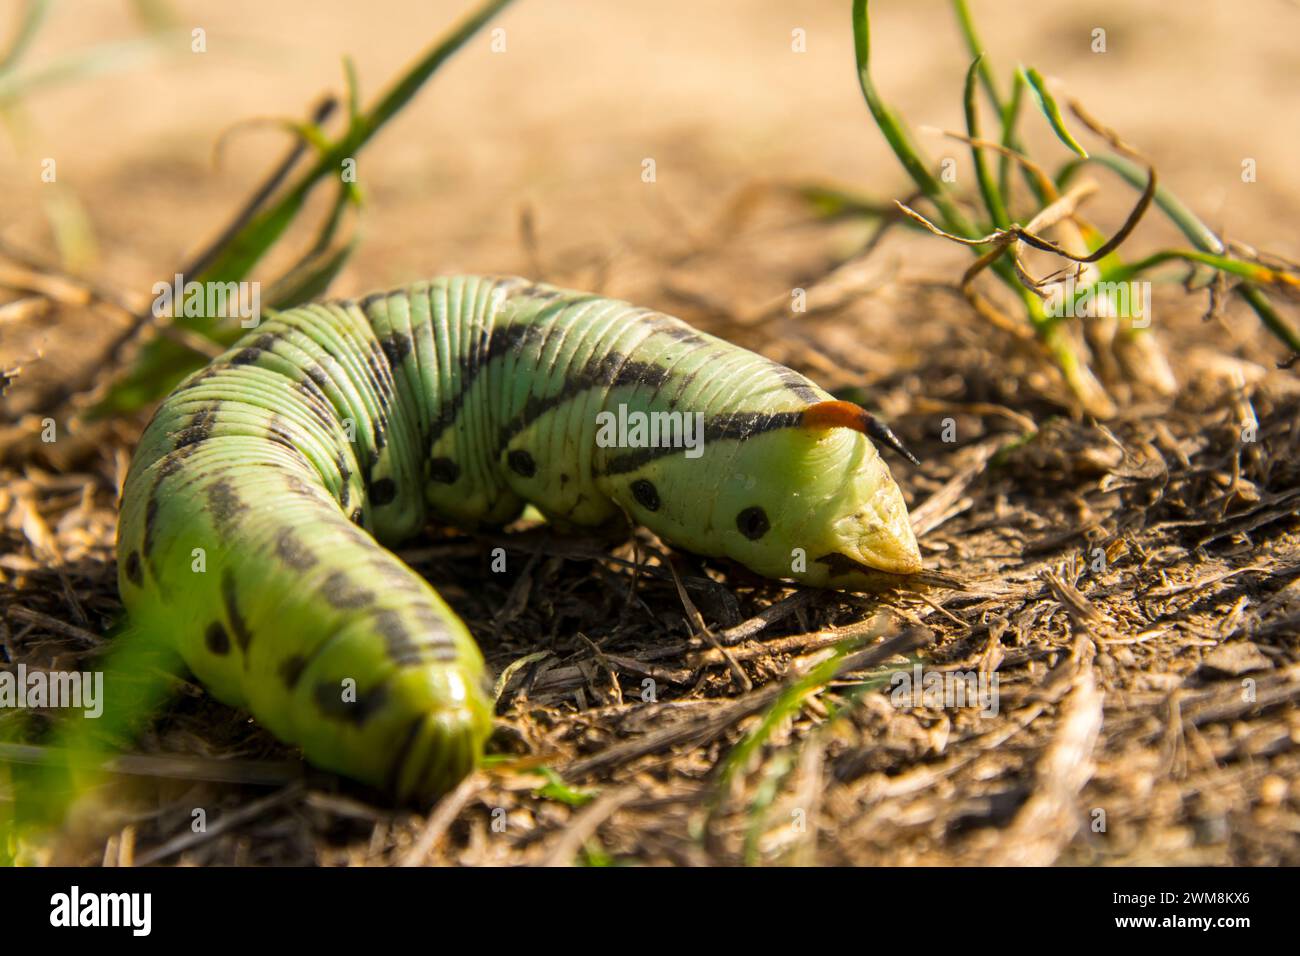 Convolvulus hawk-moth worm, its scientific name is Agrius convolvuli Stock Photo